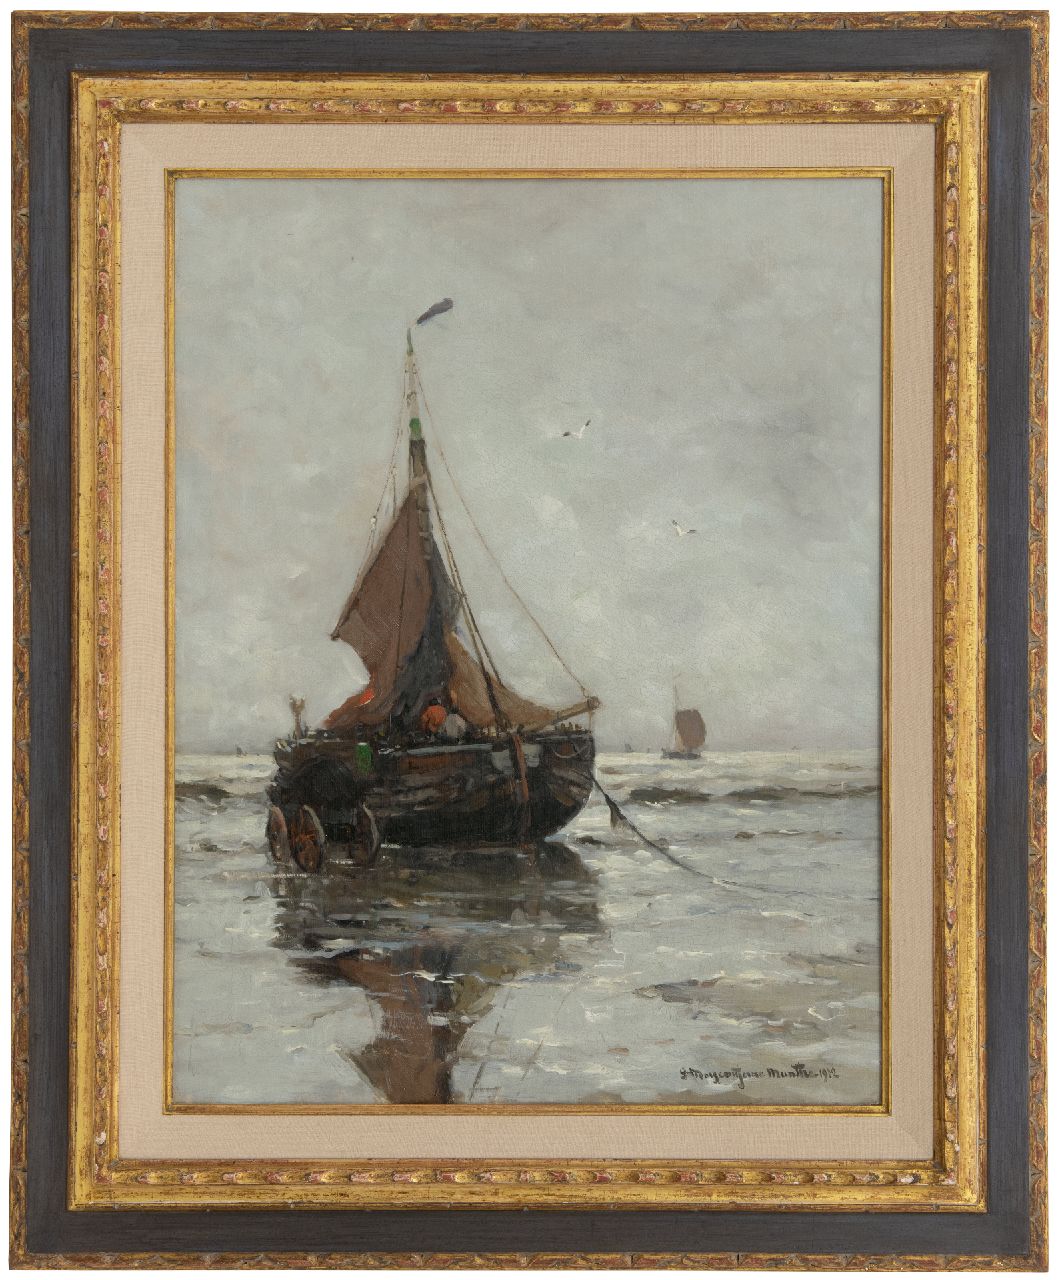 Munthe G.A.L.  | Gerhard Arij Ludwig 'Morgenstjerne' Munthe, Bomschuit on the beach, Katwijk, oil on canvas 67.3 x 51.6 cm, signed l.r. and dated 1912